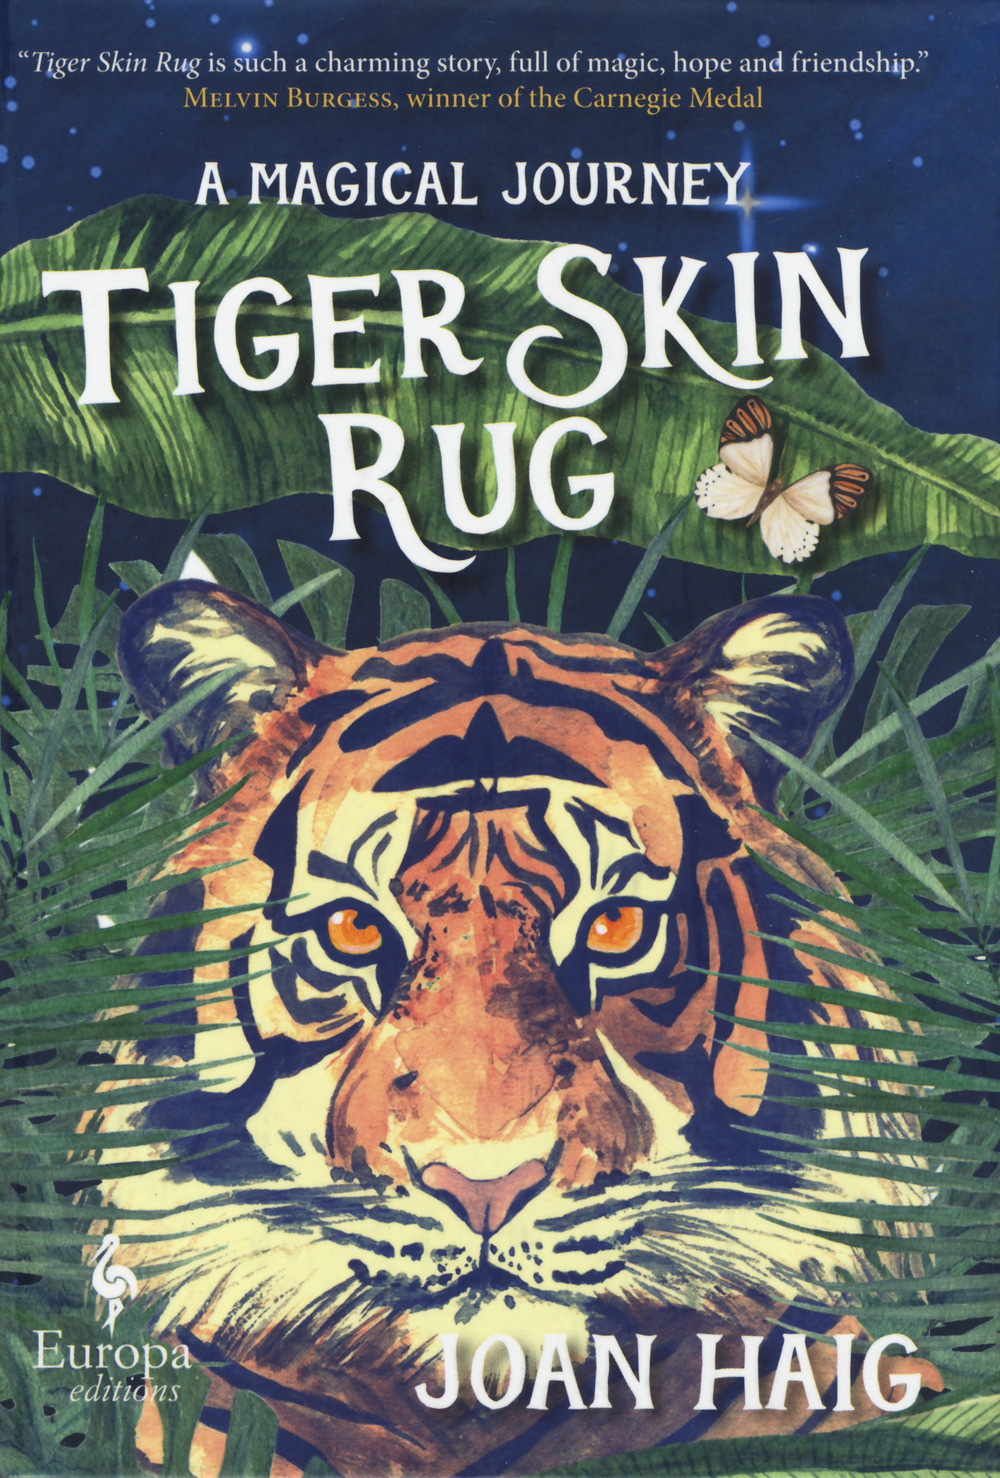 A Magical journey. Tiger skin rug